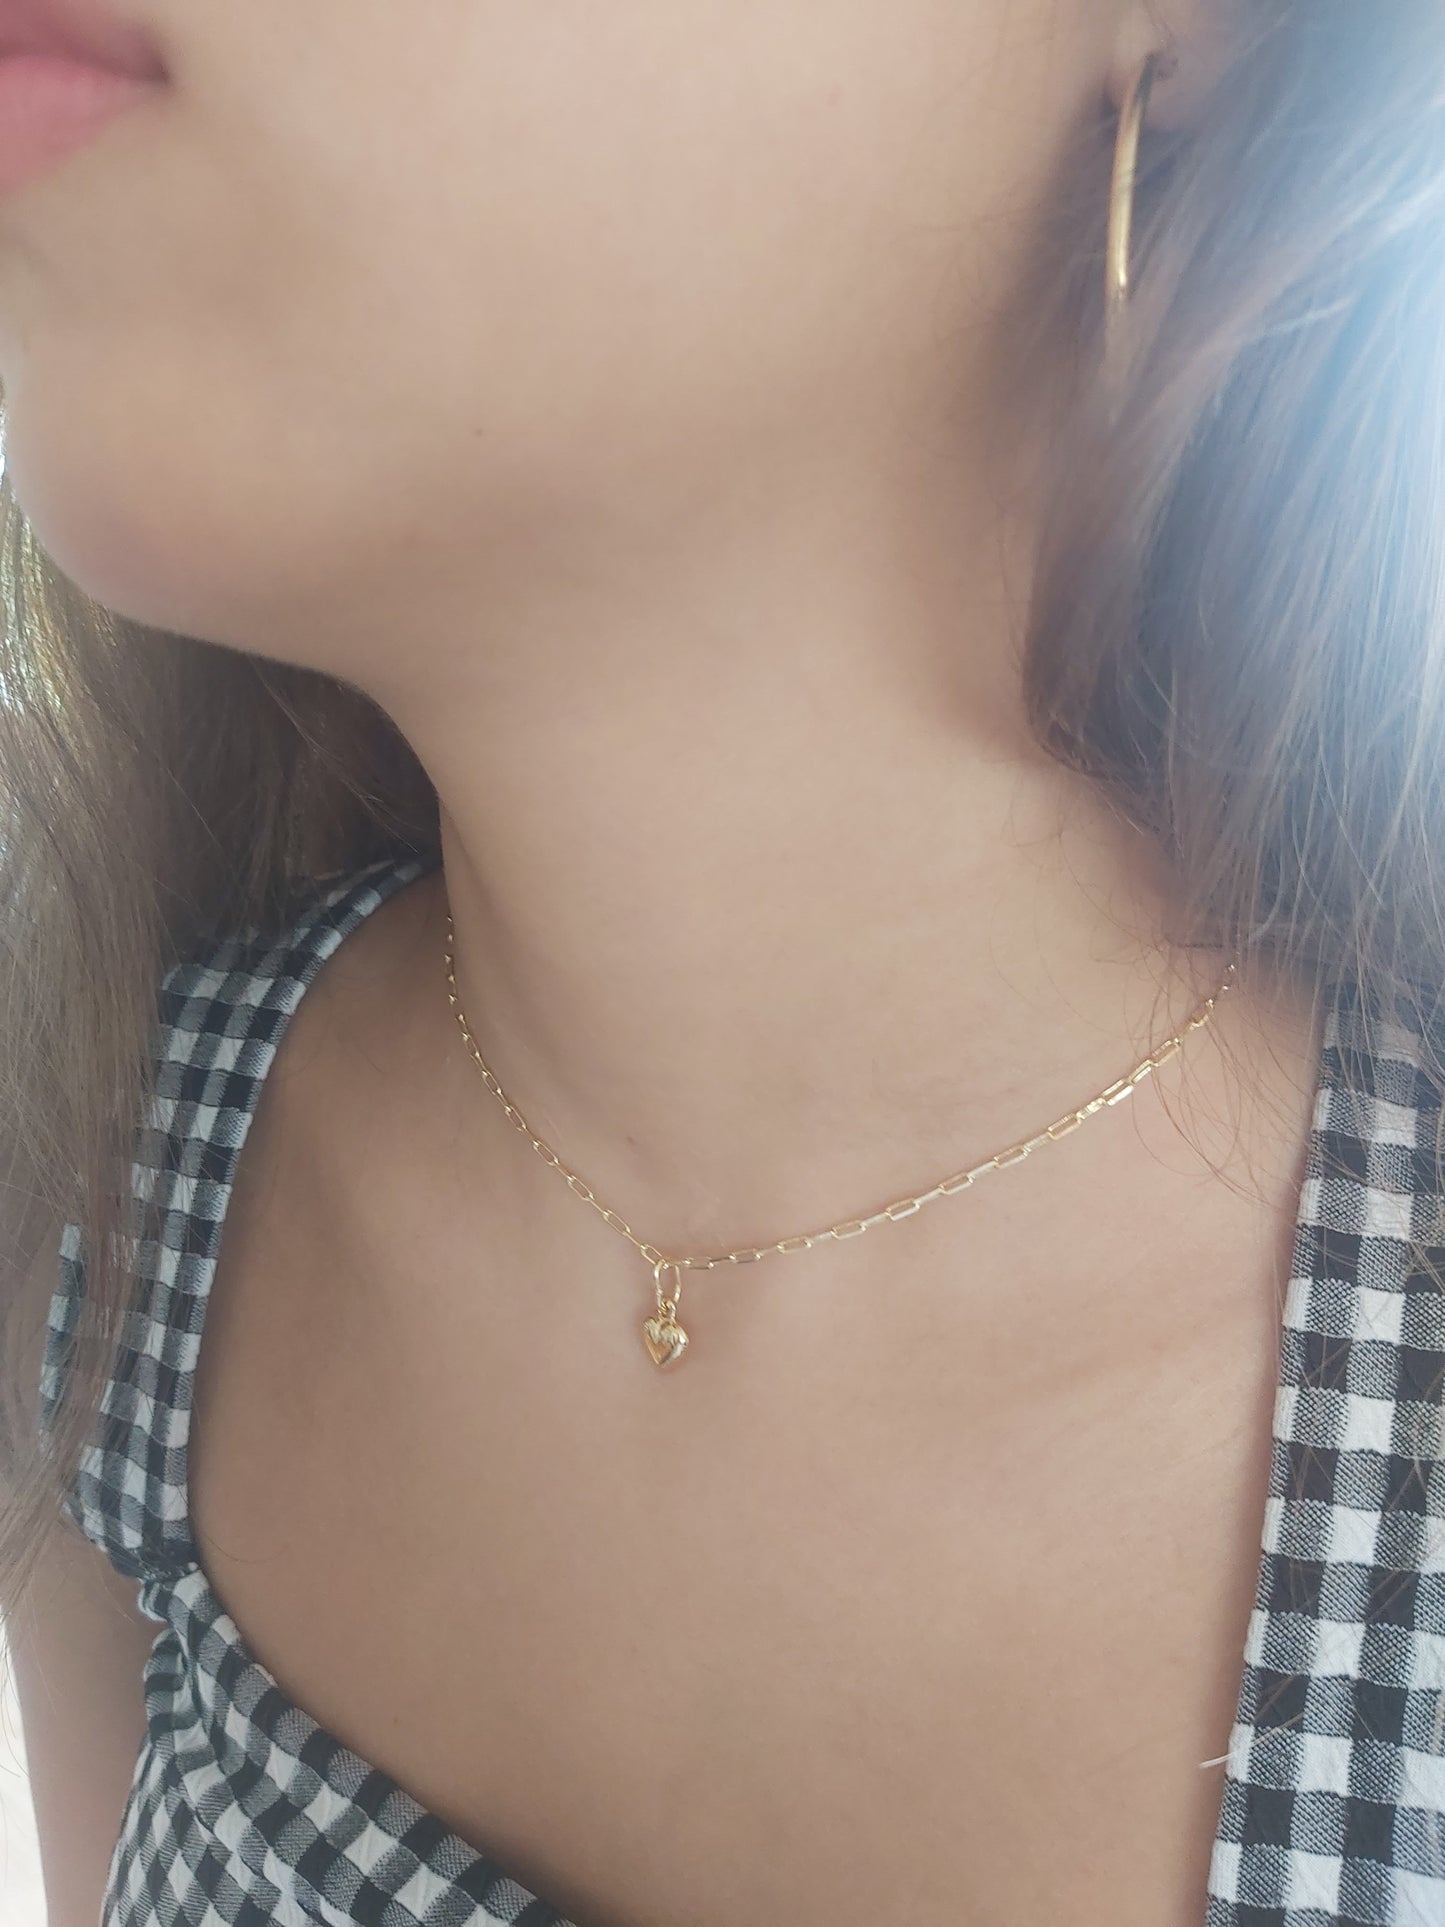 Stunning Heart Necklace